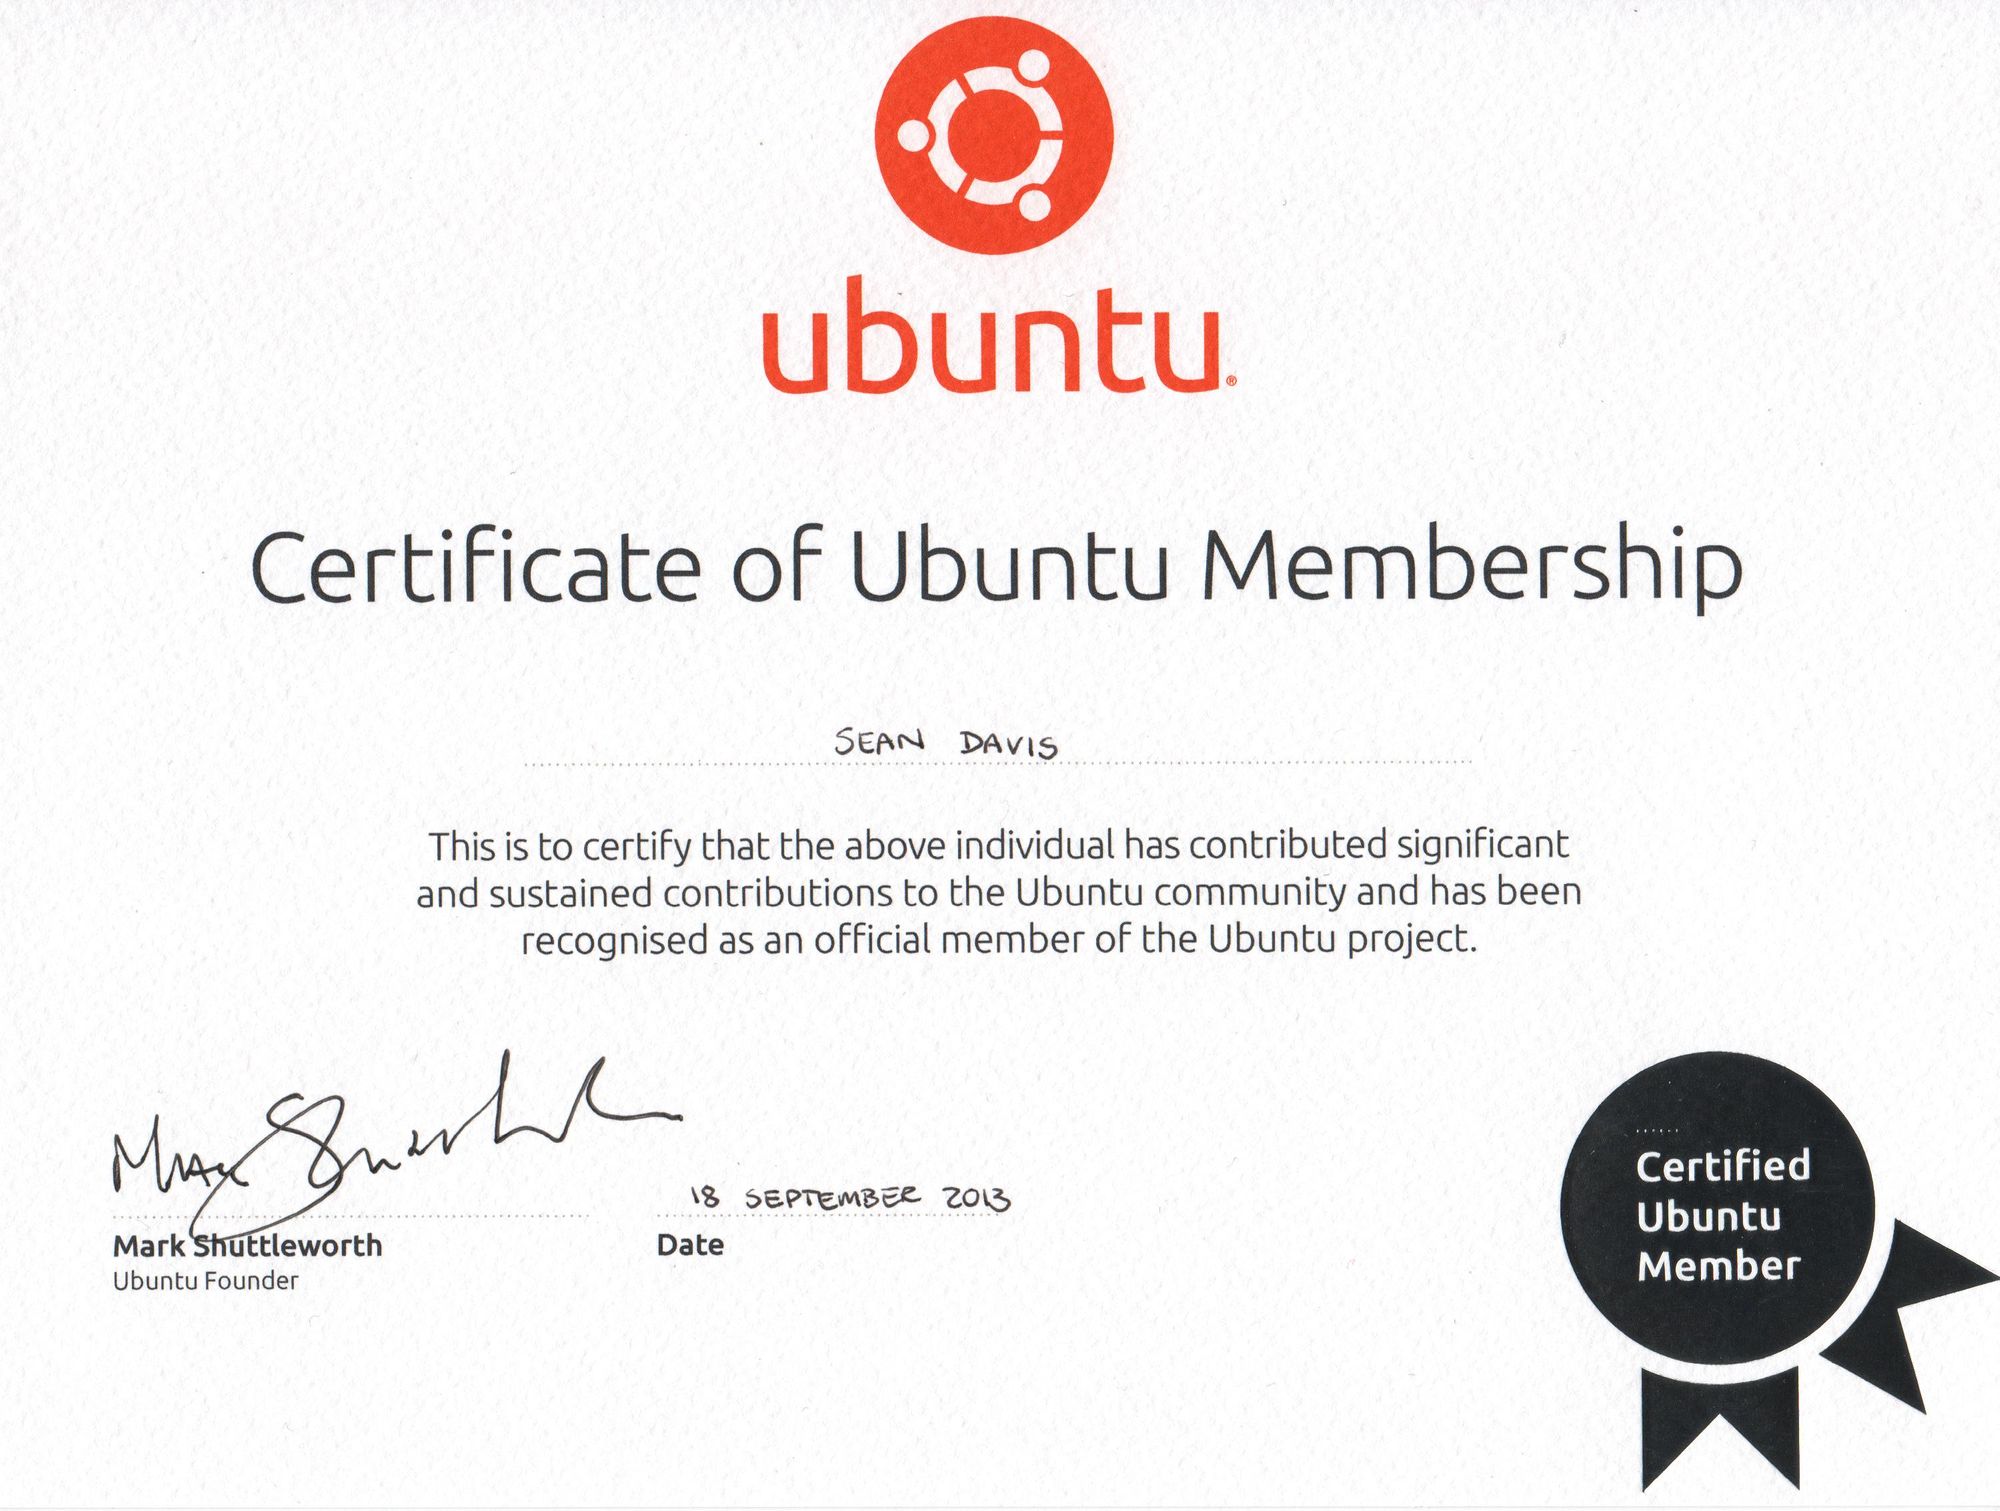 Officially an Ubuntu Member